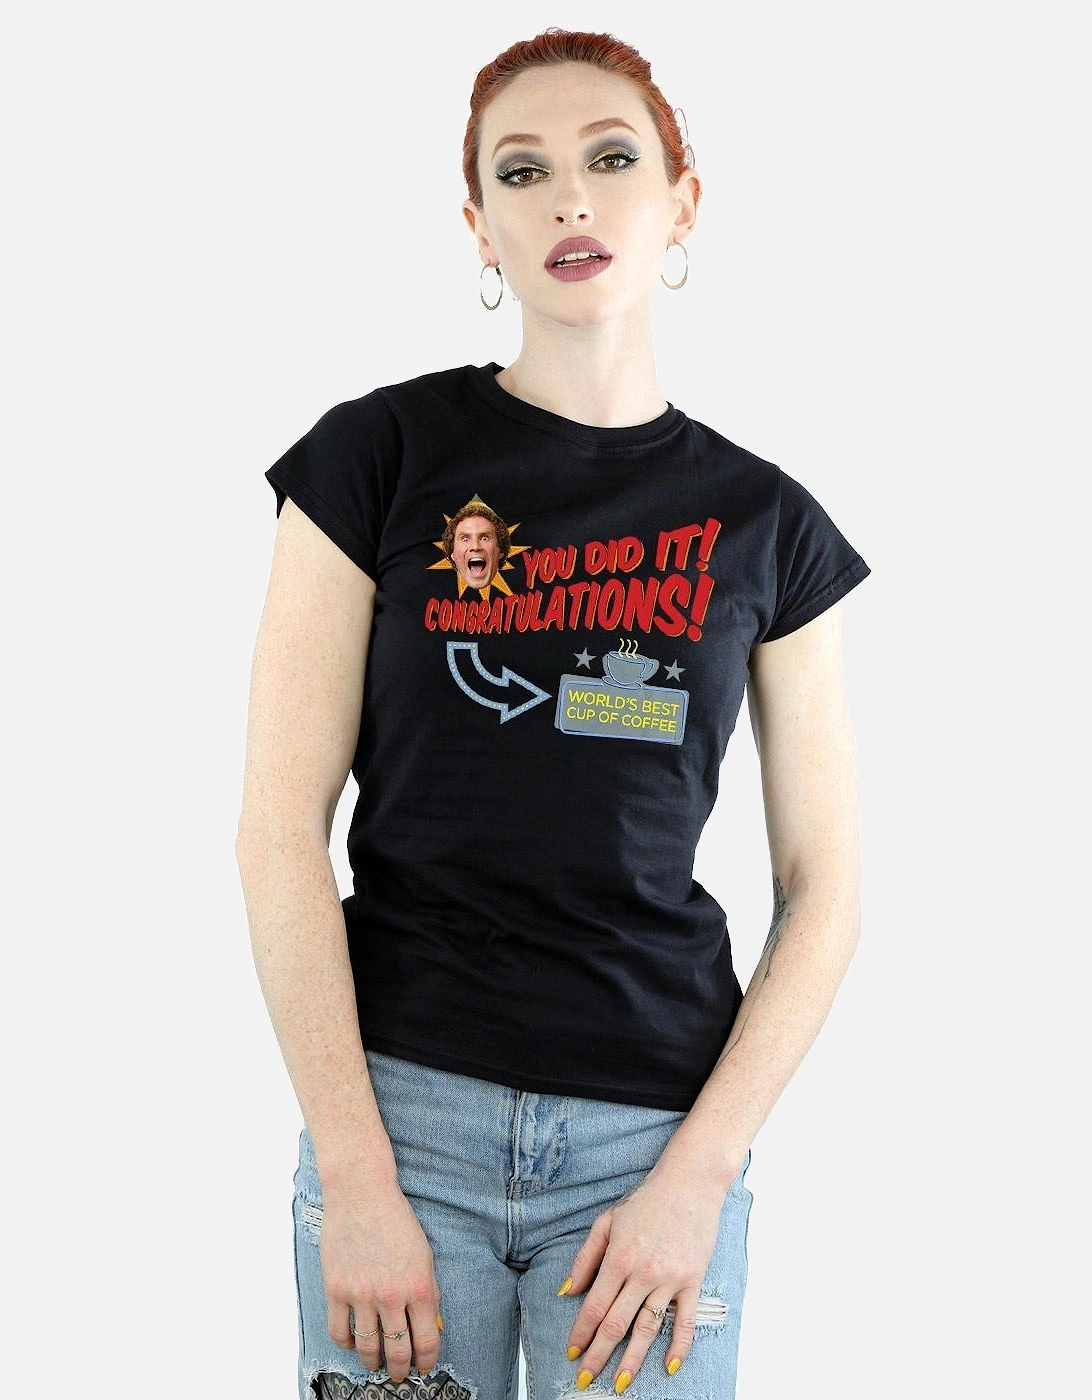 Womens/Ladies World?'s Best Coffee Cotton T-Shirt